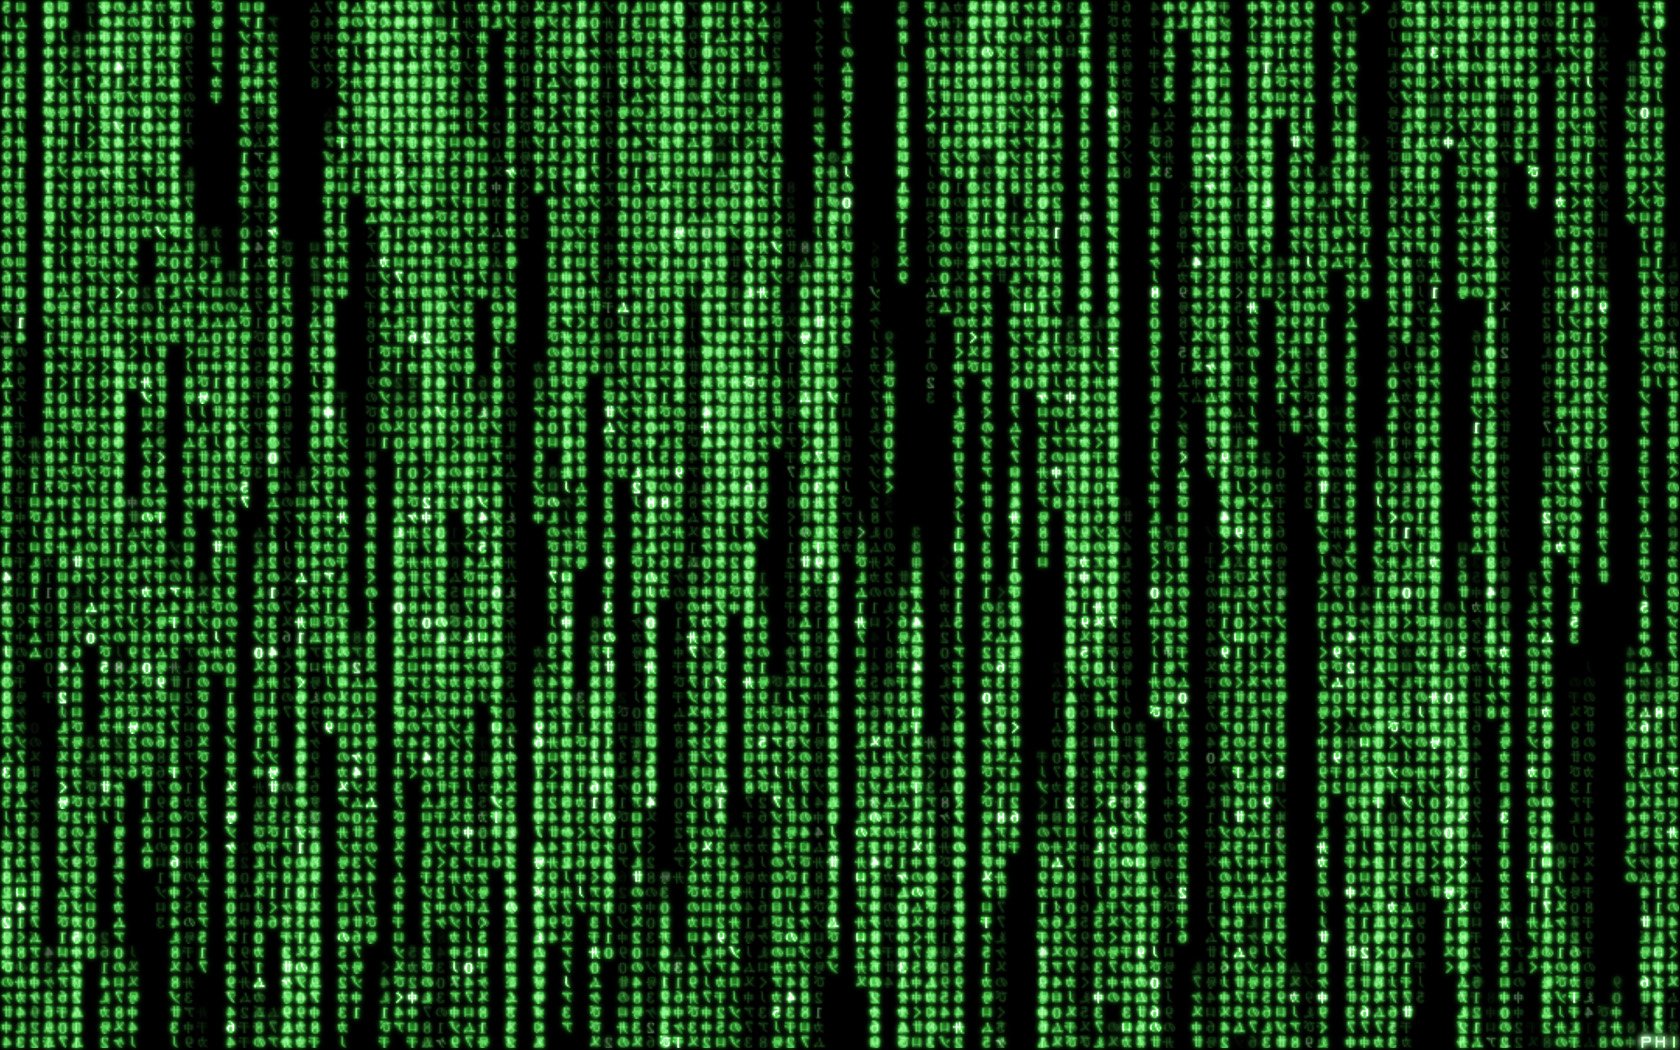 Matrix code by phi AU on